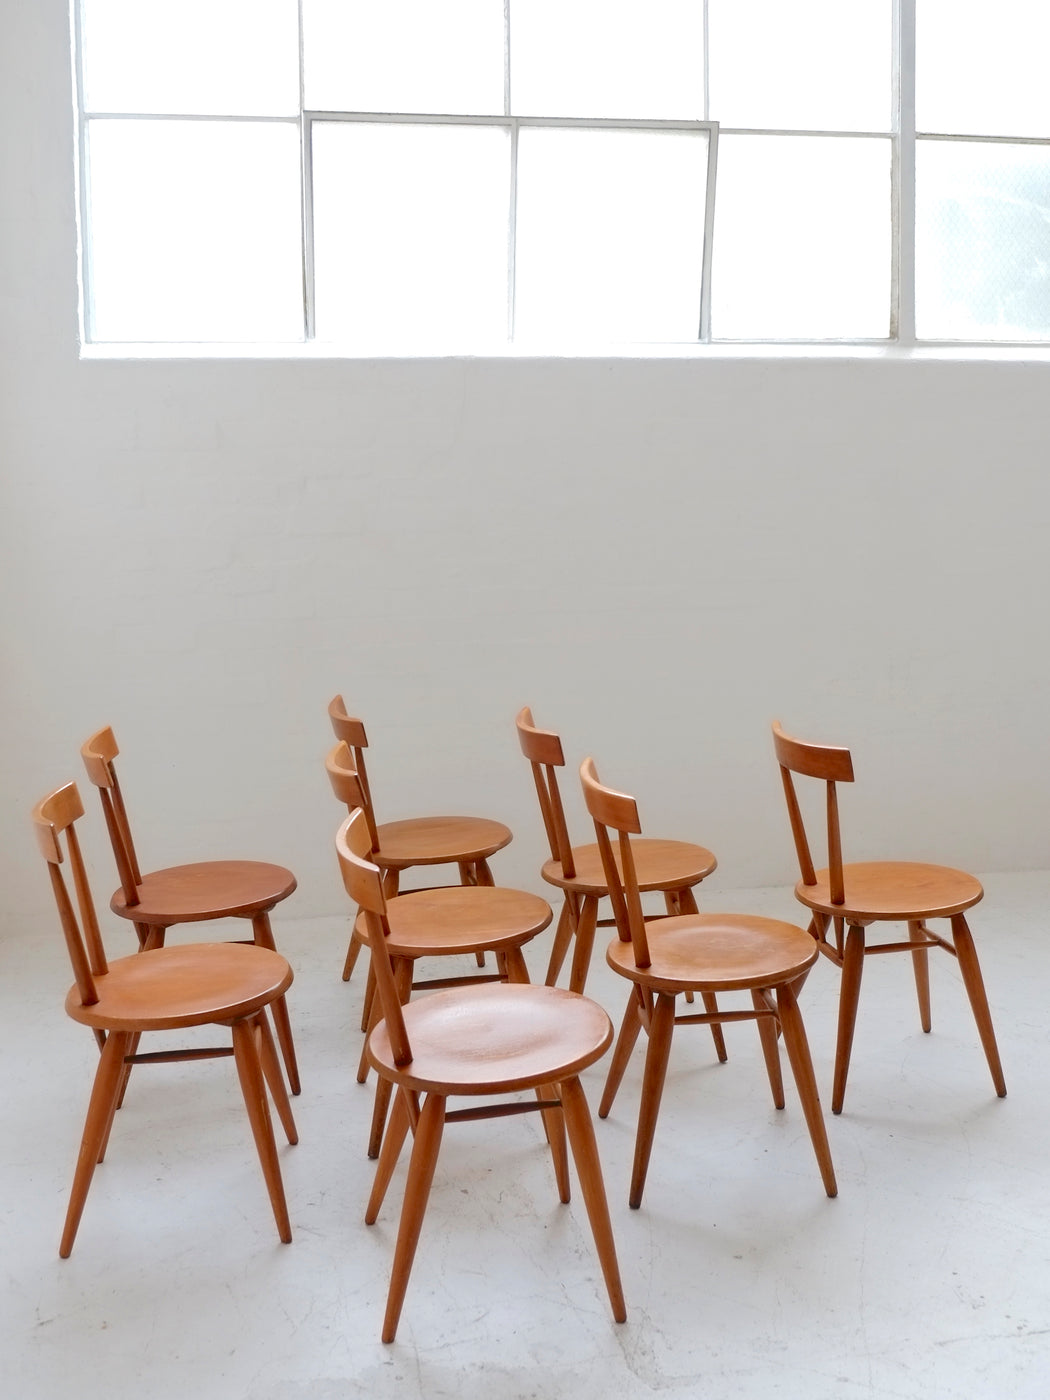 Fred Ward 'Swedish Style' Chairs